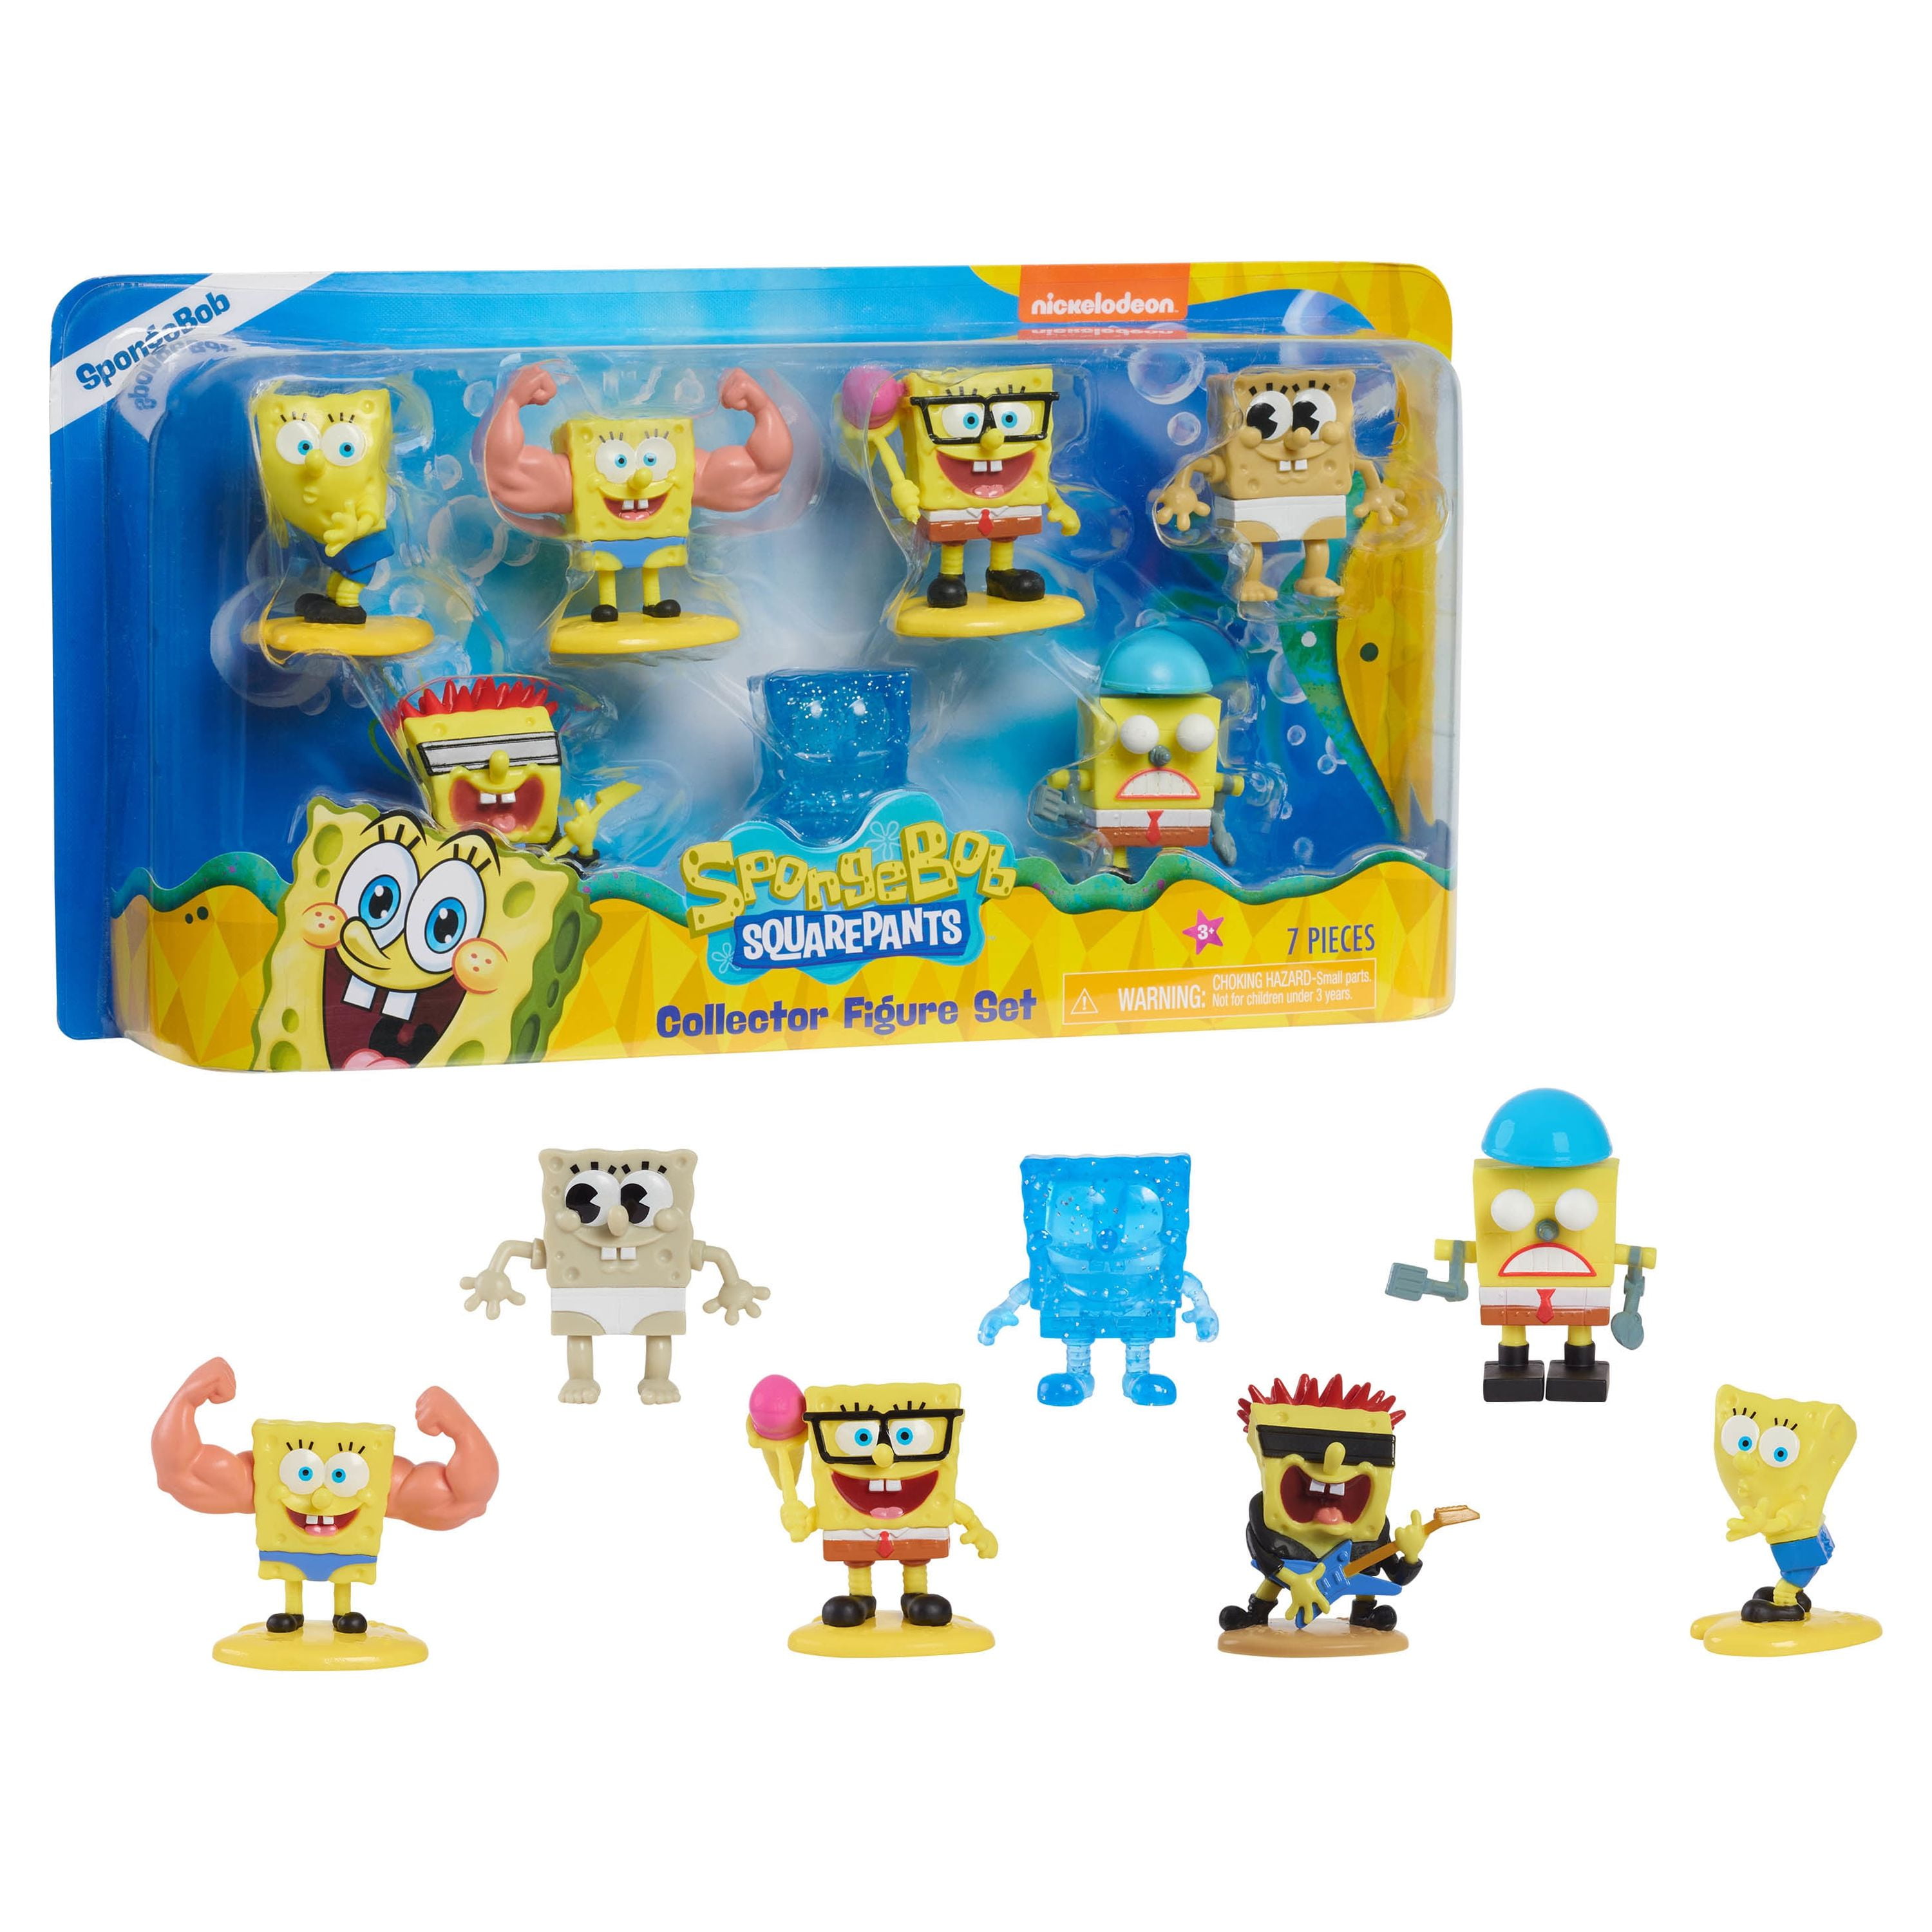 SpongeBob SquarePants Collectible Figure Set, Kids Toys for Ages 3